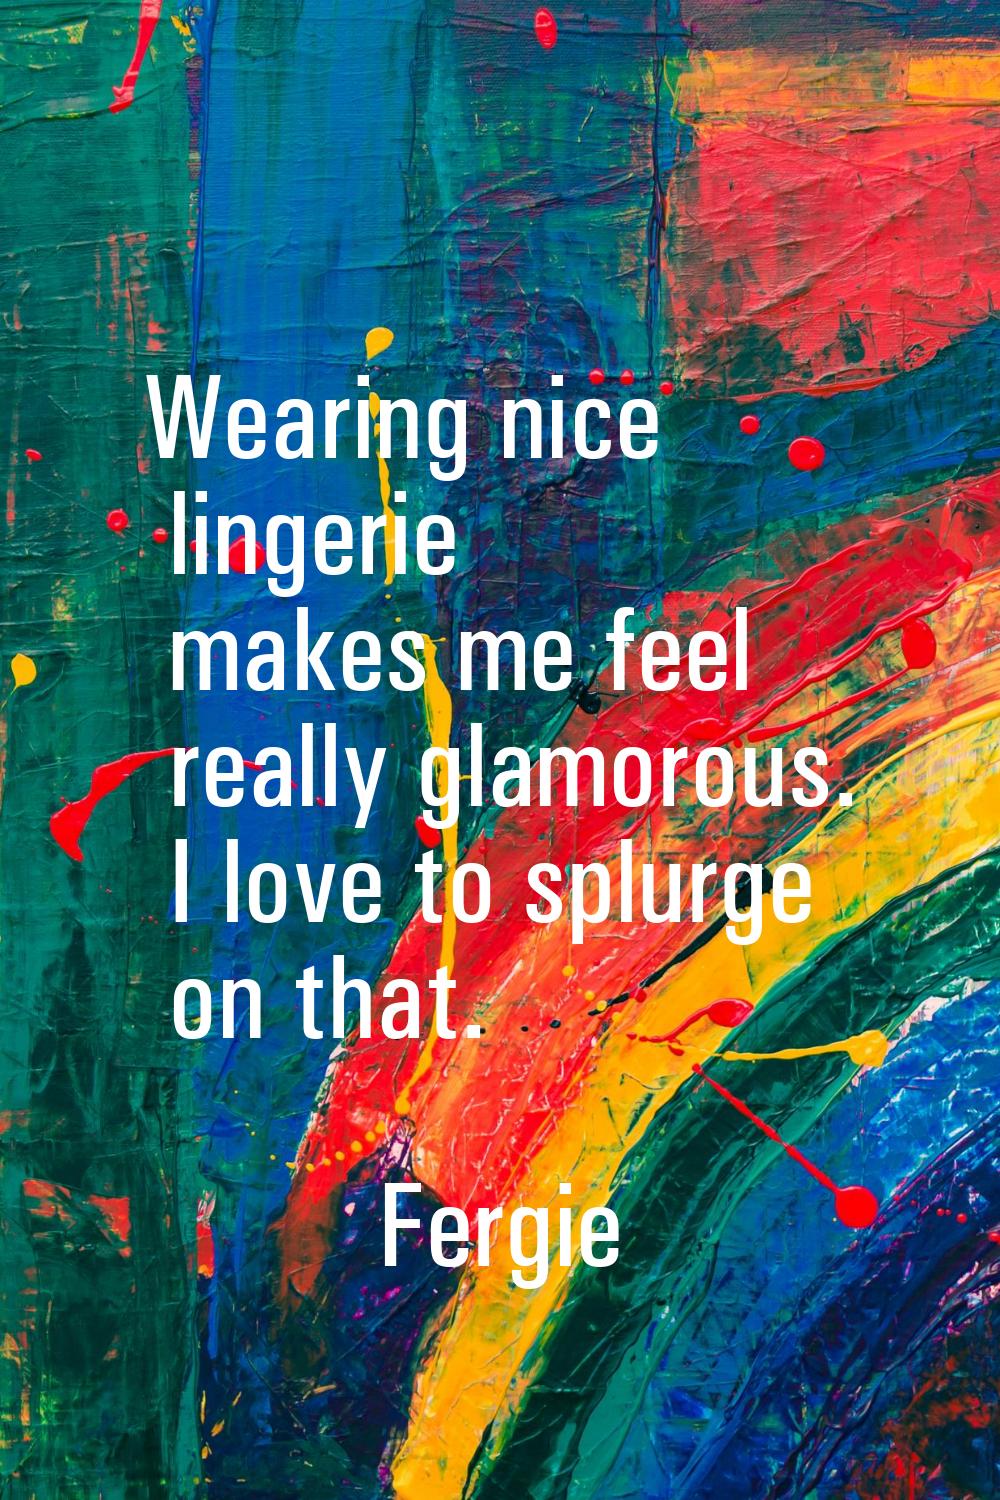 Wearing nice lingerie makes me feel really glamorous. I love to splurge on that.